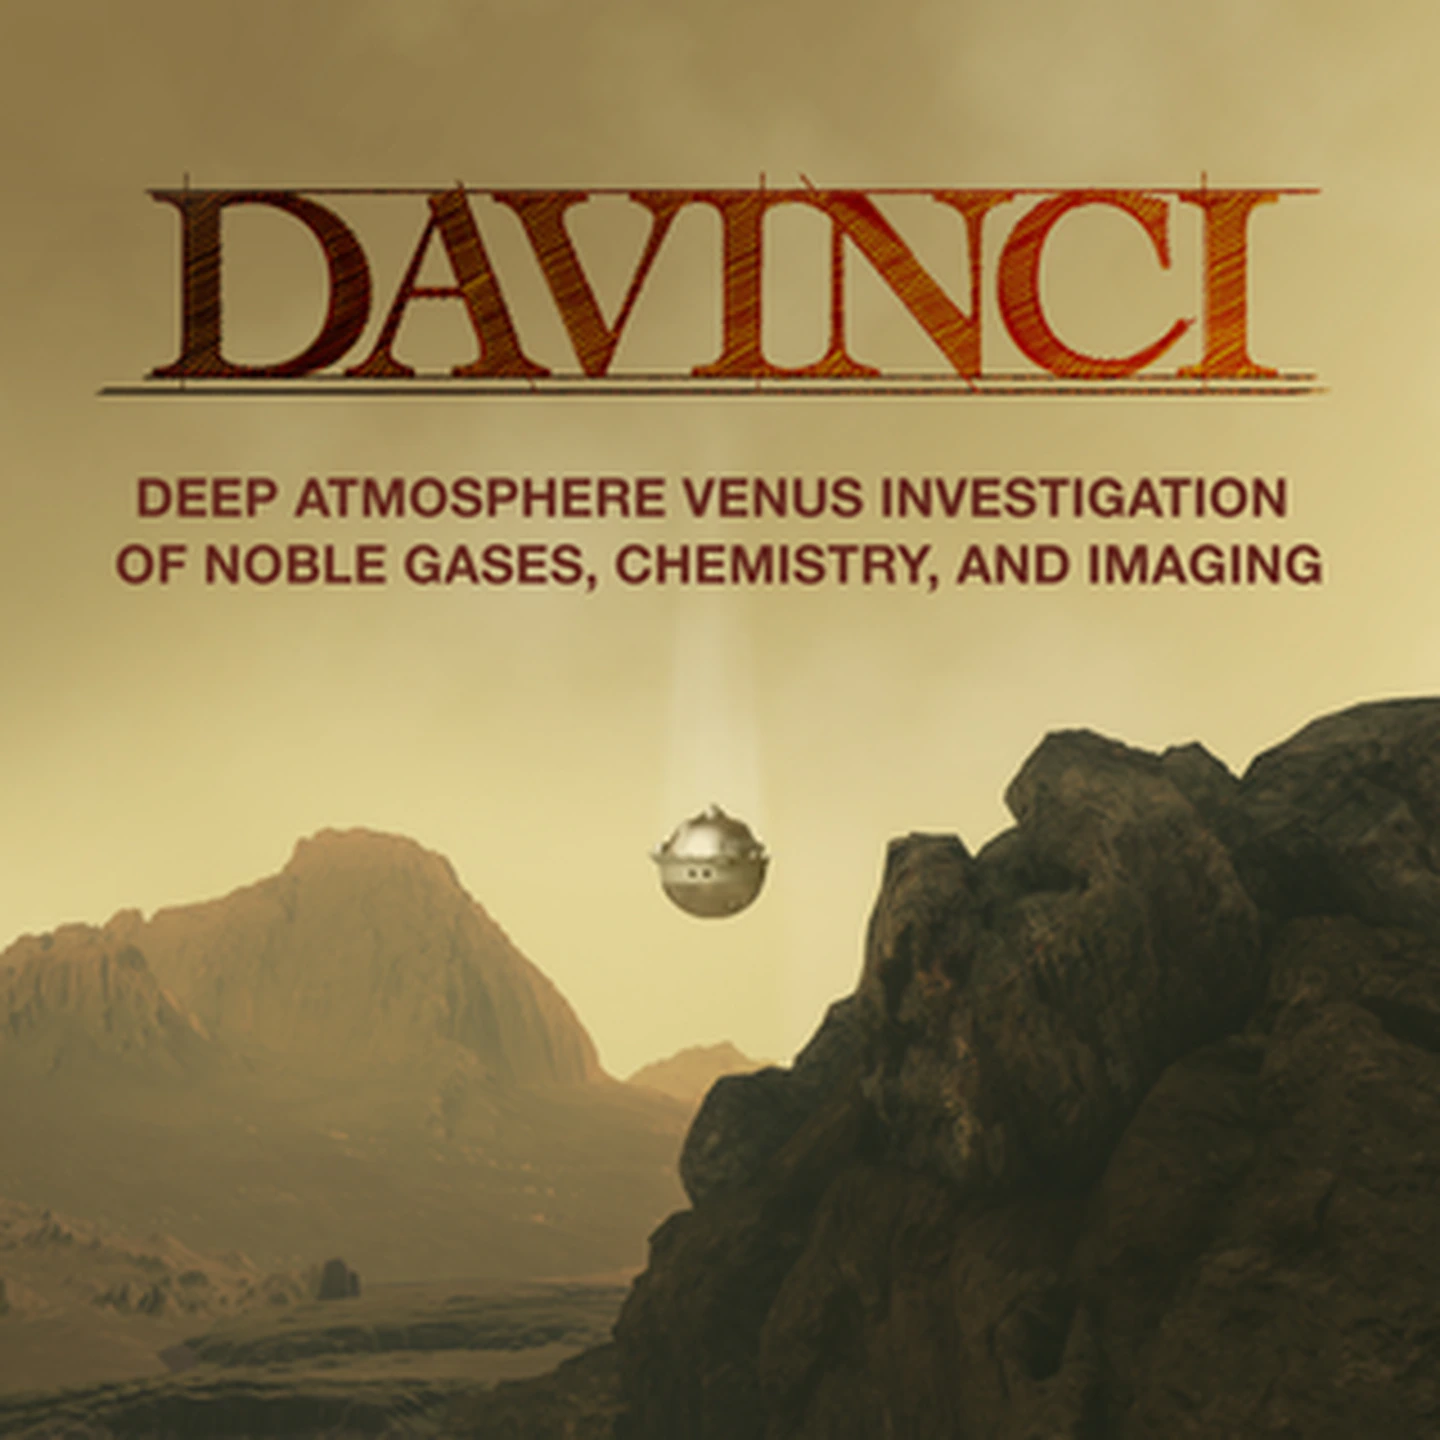 NASA plans 'DaVinci' mission to reach Venus's surface